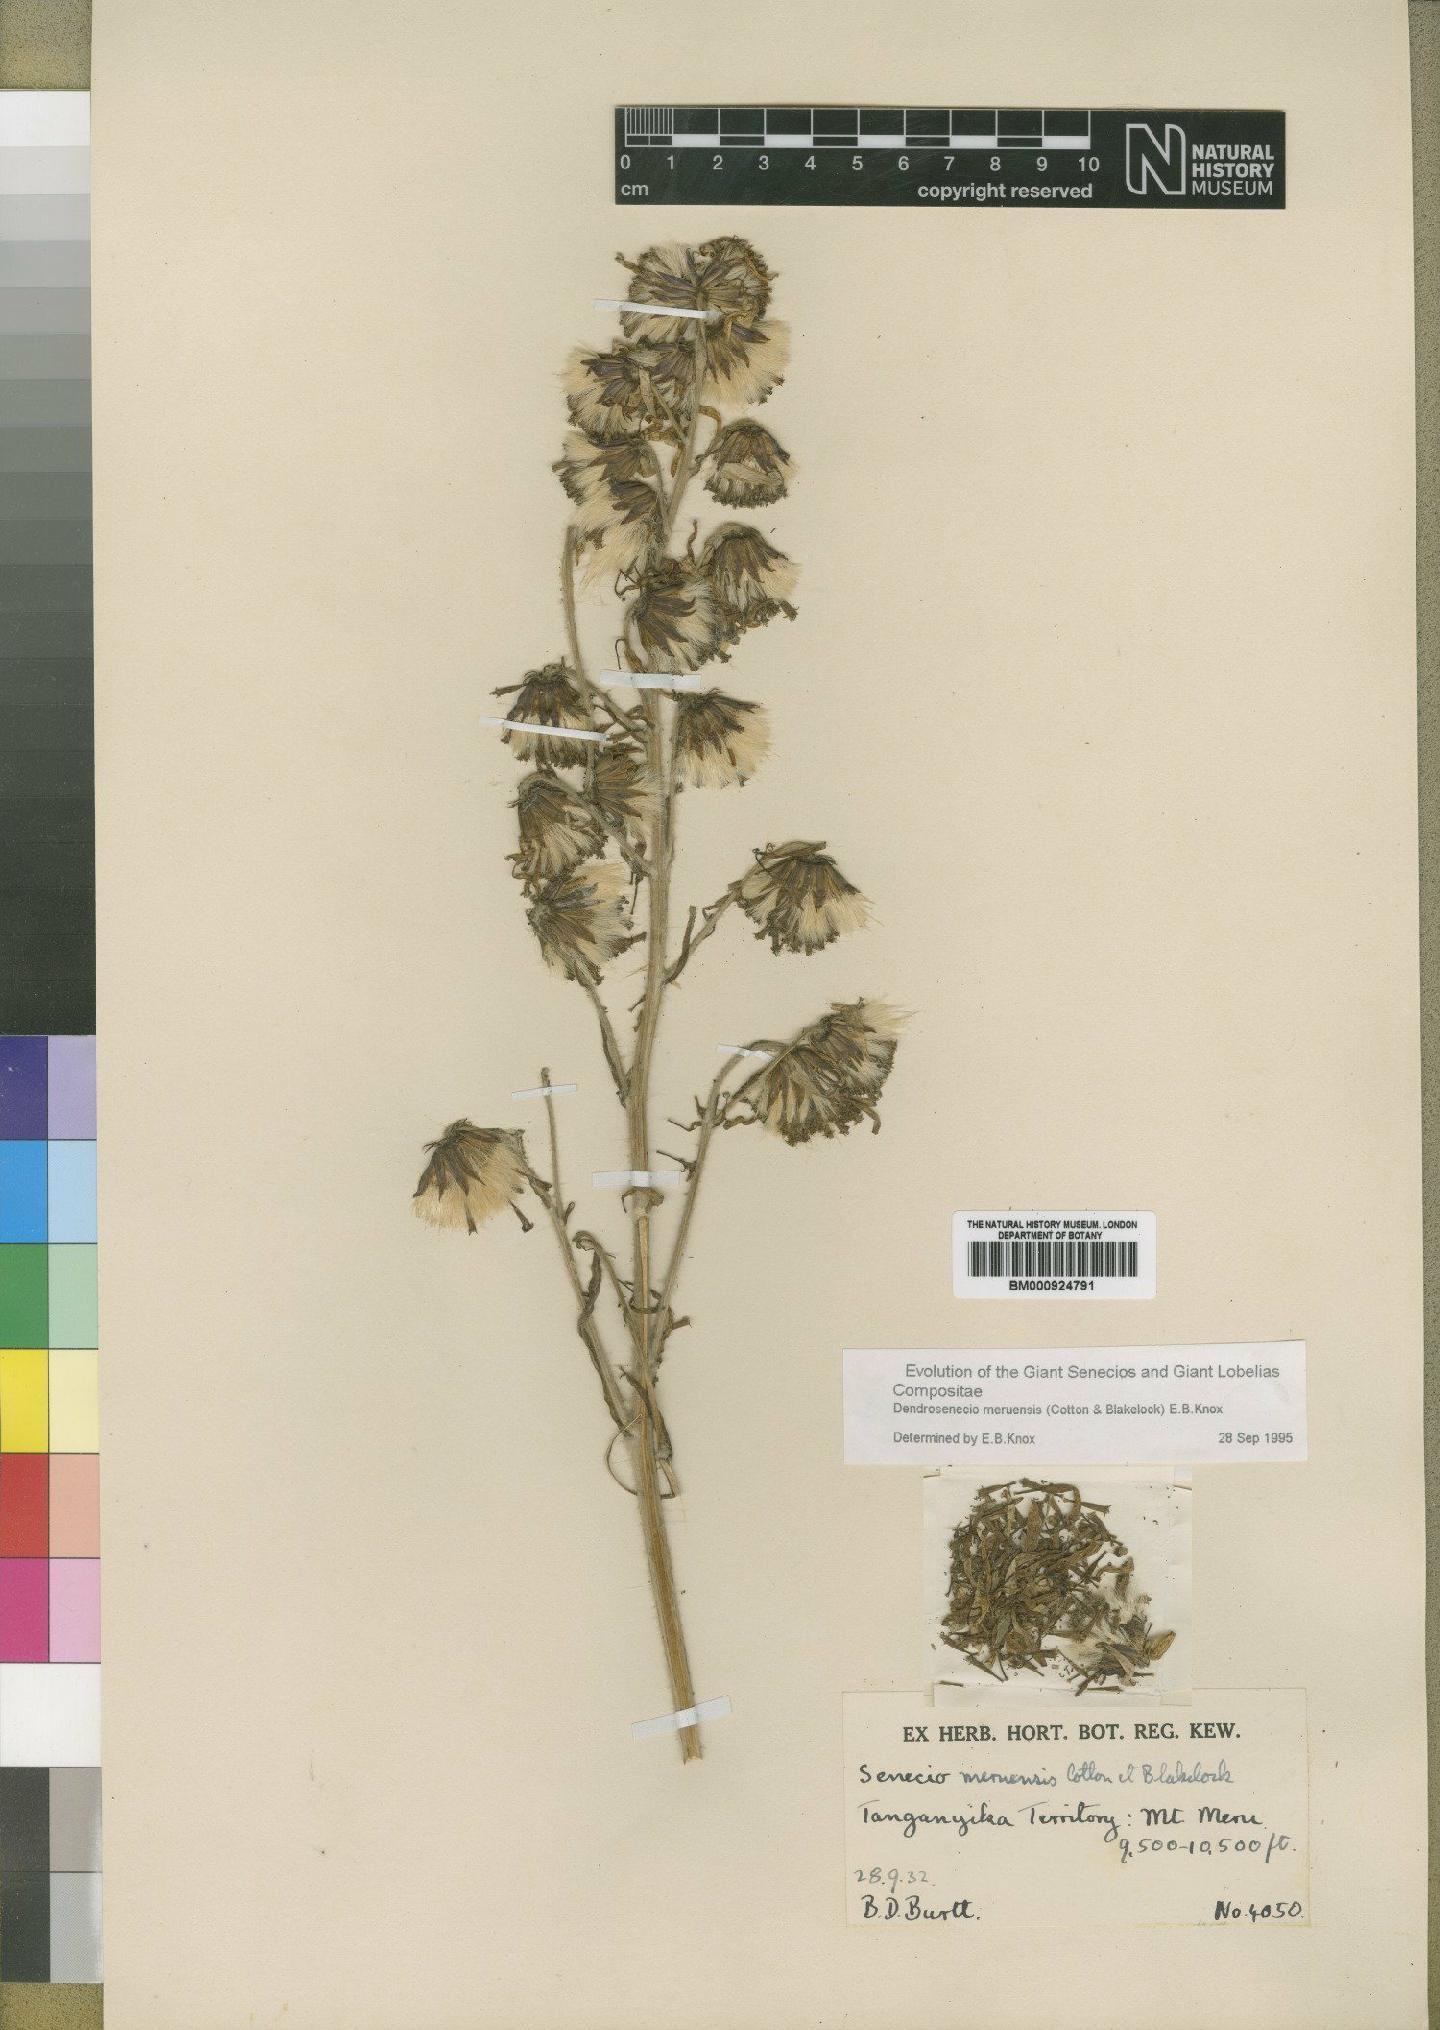 To NHMUK collection (Dendrosenecio meruensis (Cotton & Blakelock) E.B.Knox; Type; NHMUK:ecatalogue:4553511)